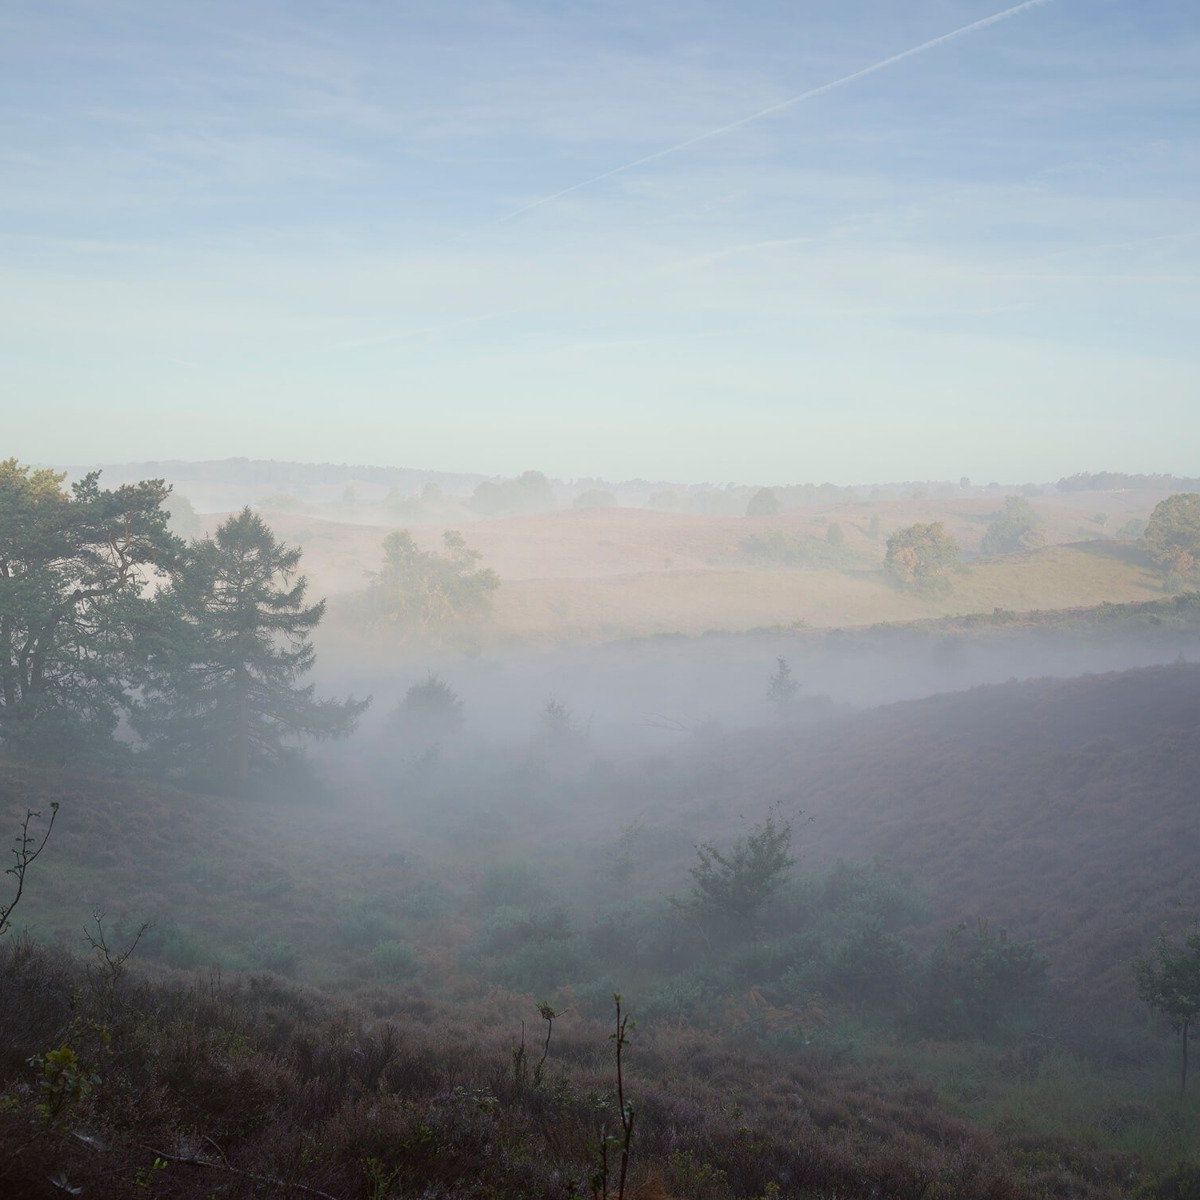 Fog on the heath